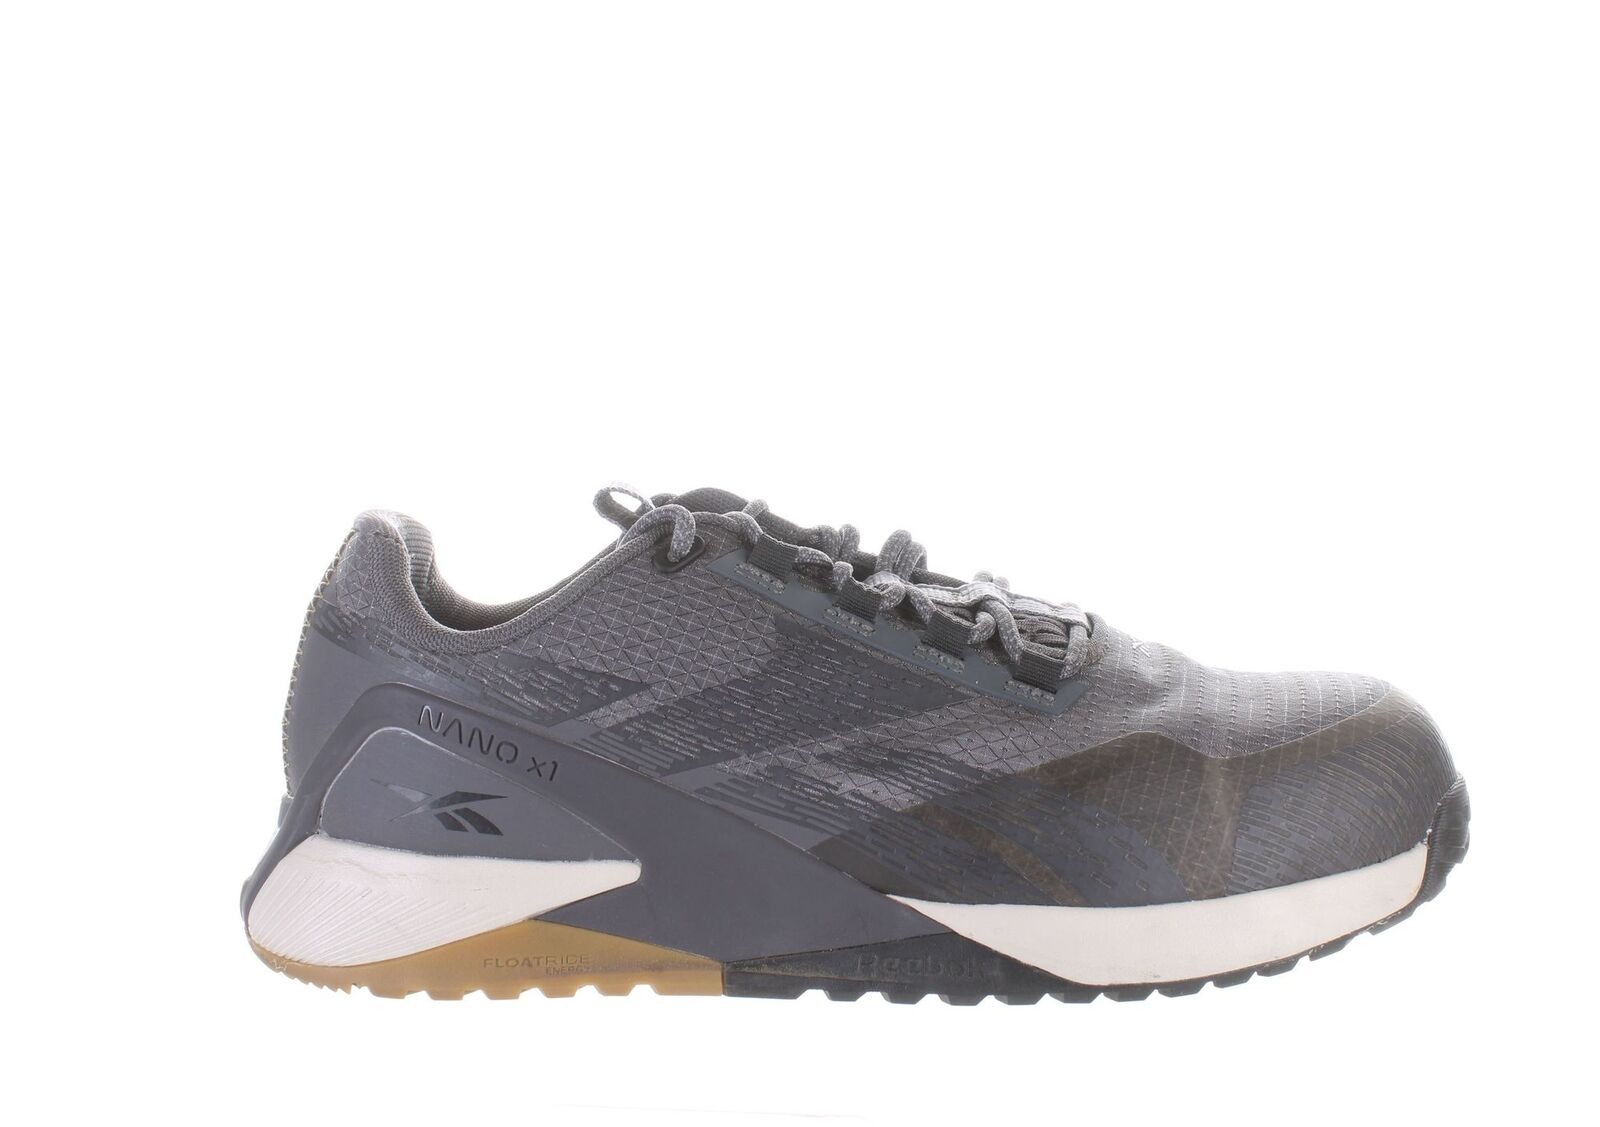 Reebok Mens Lavante Trail 2 Gray Safety Shoes Size 9 (Wide) (7604573)